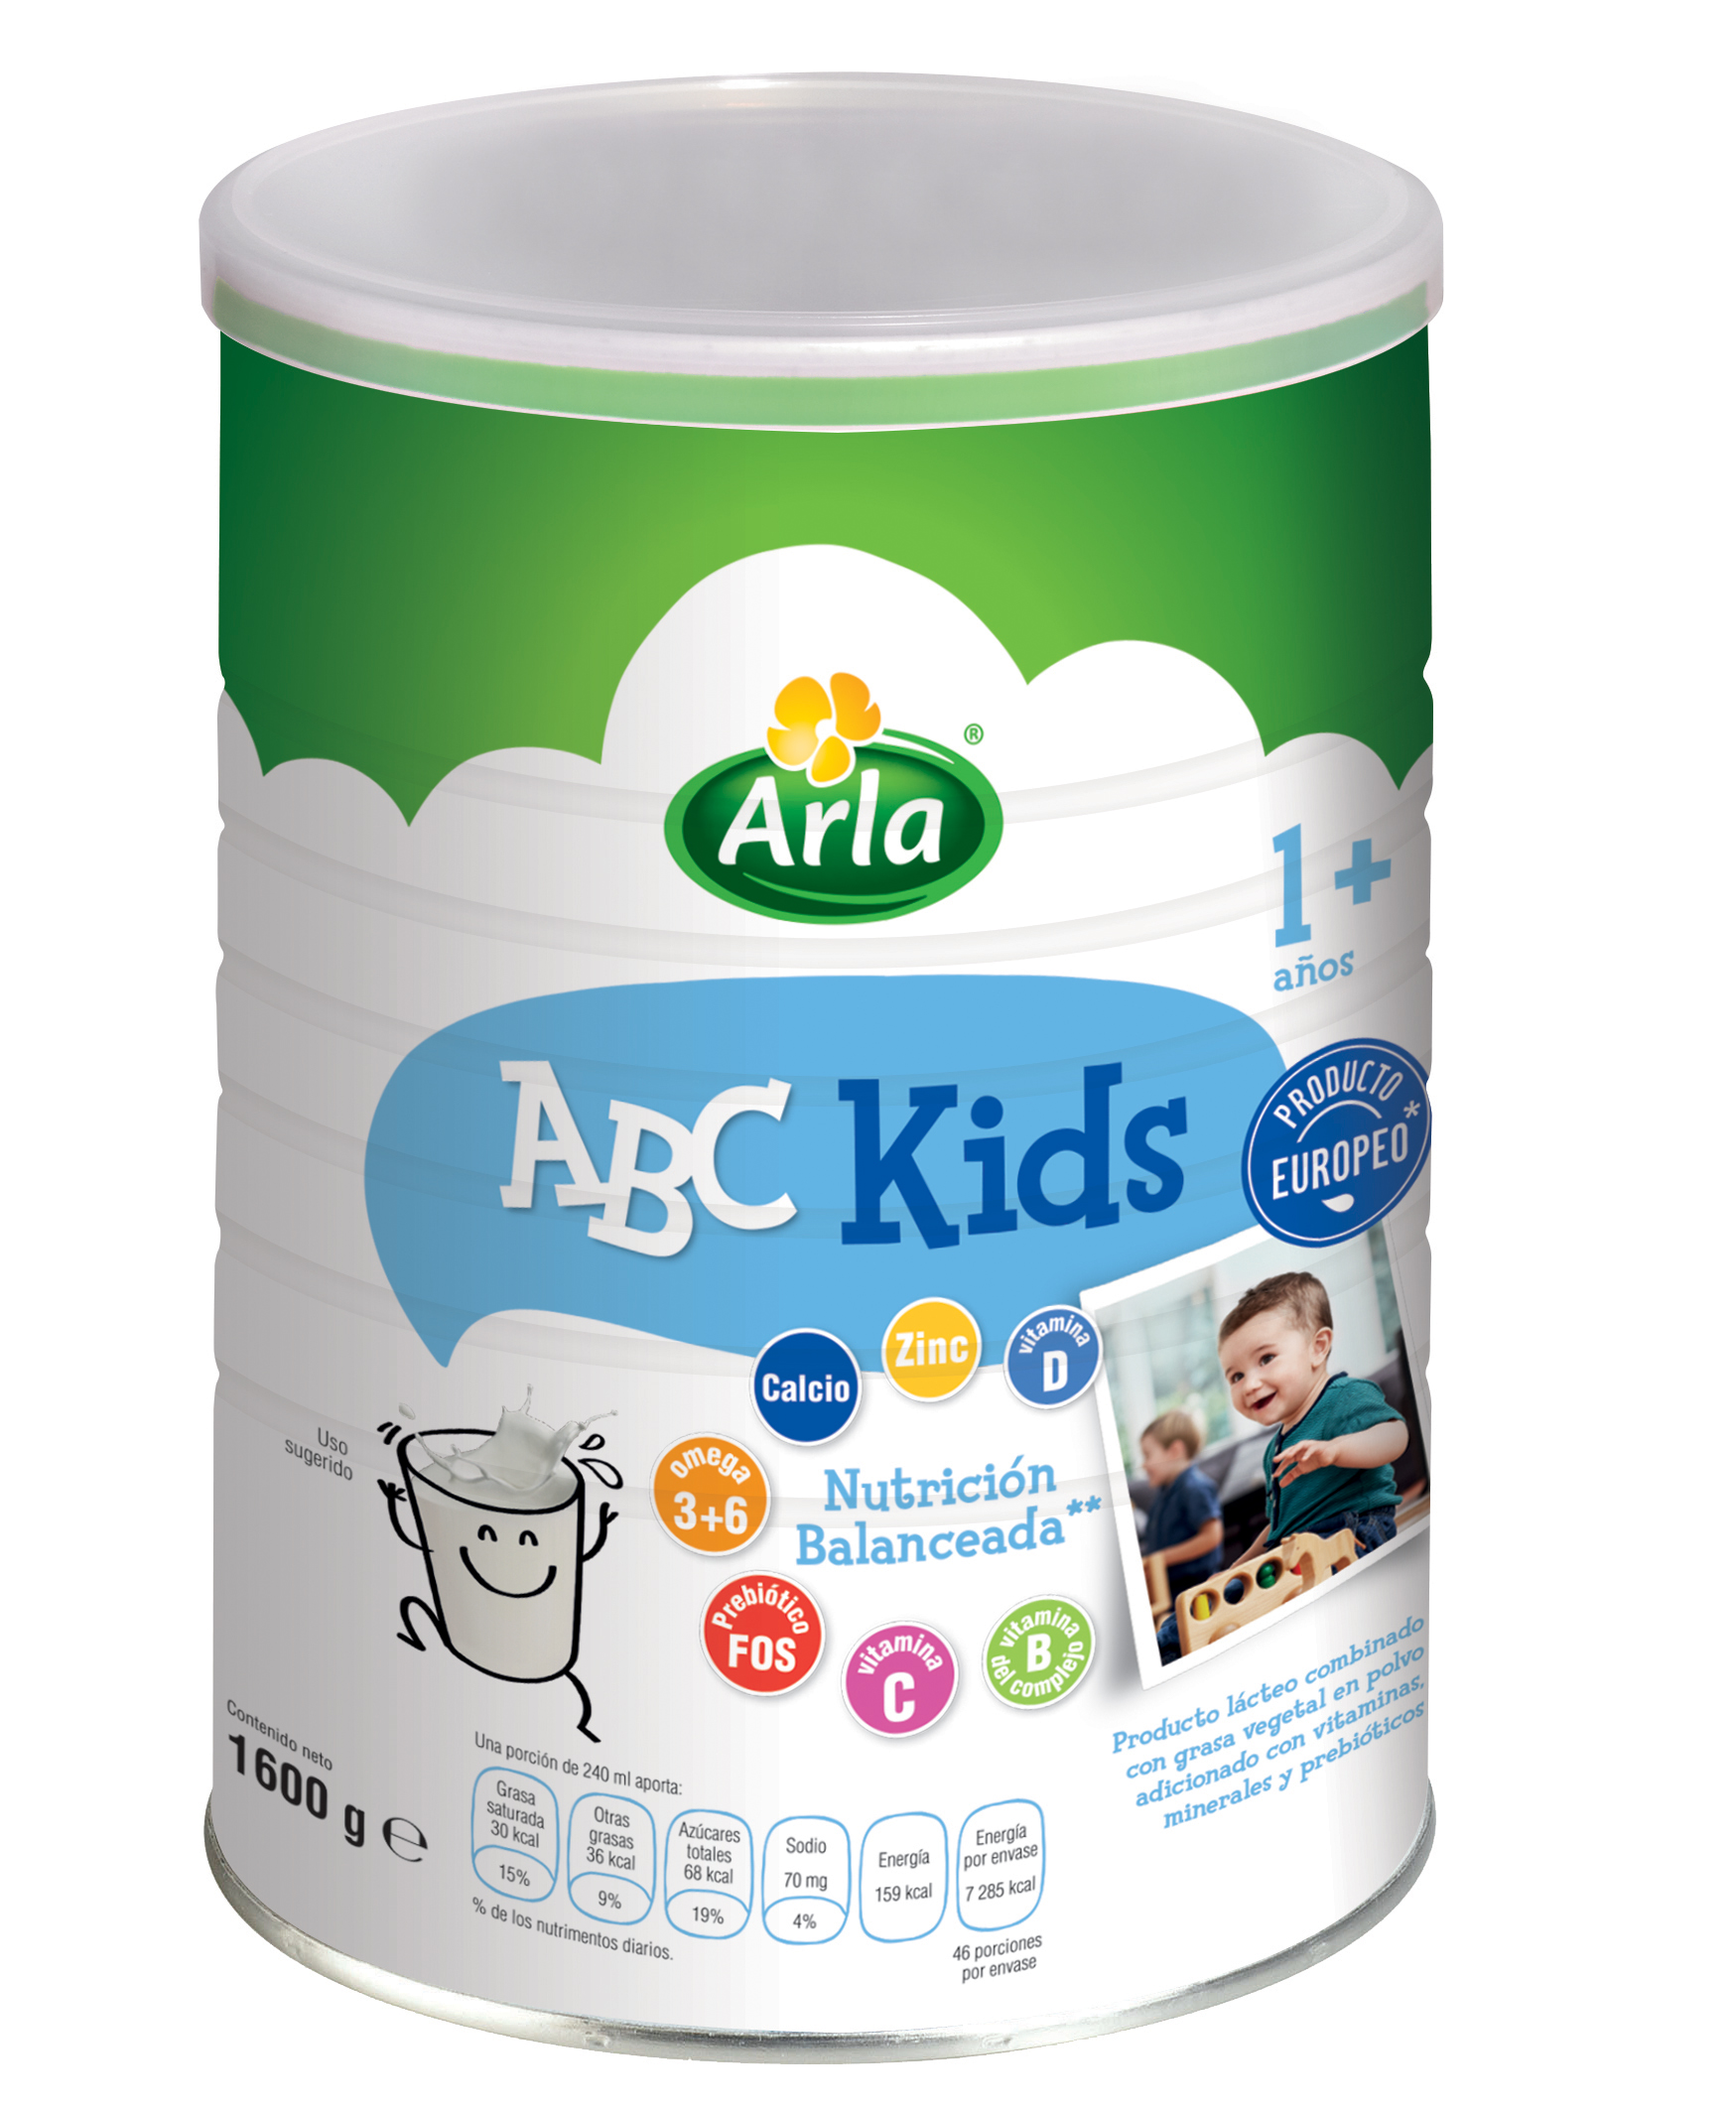 Arla ABC Kids® ABC Kids Lata 1600g